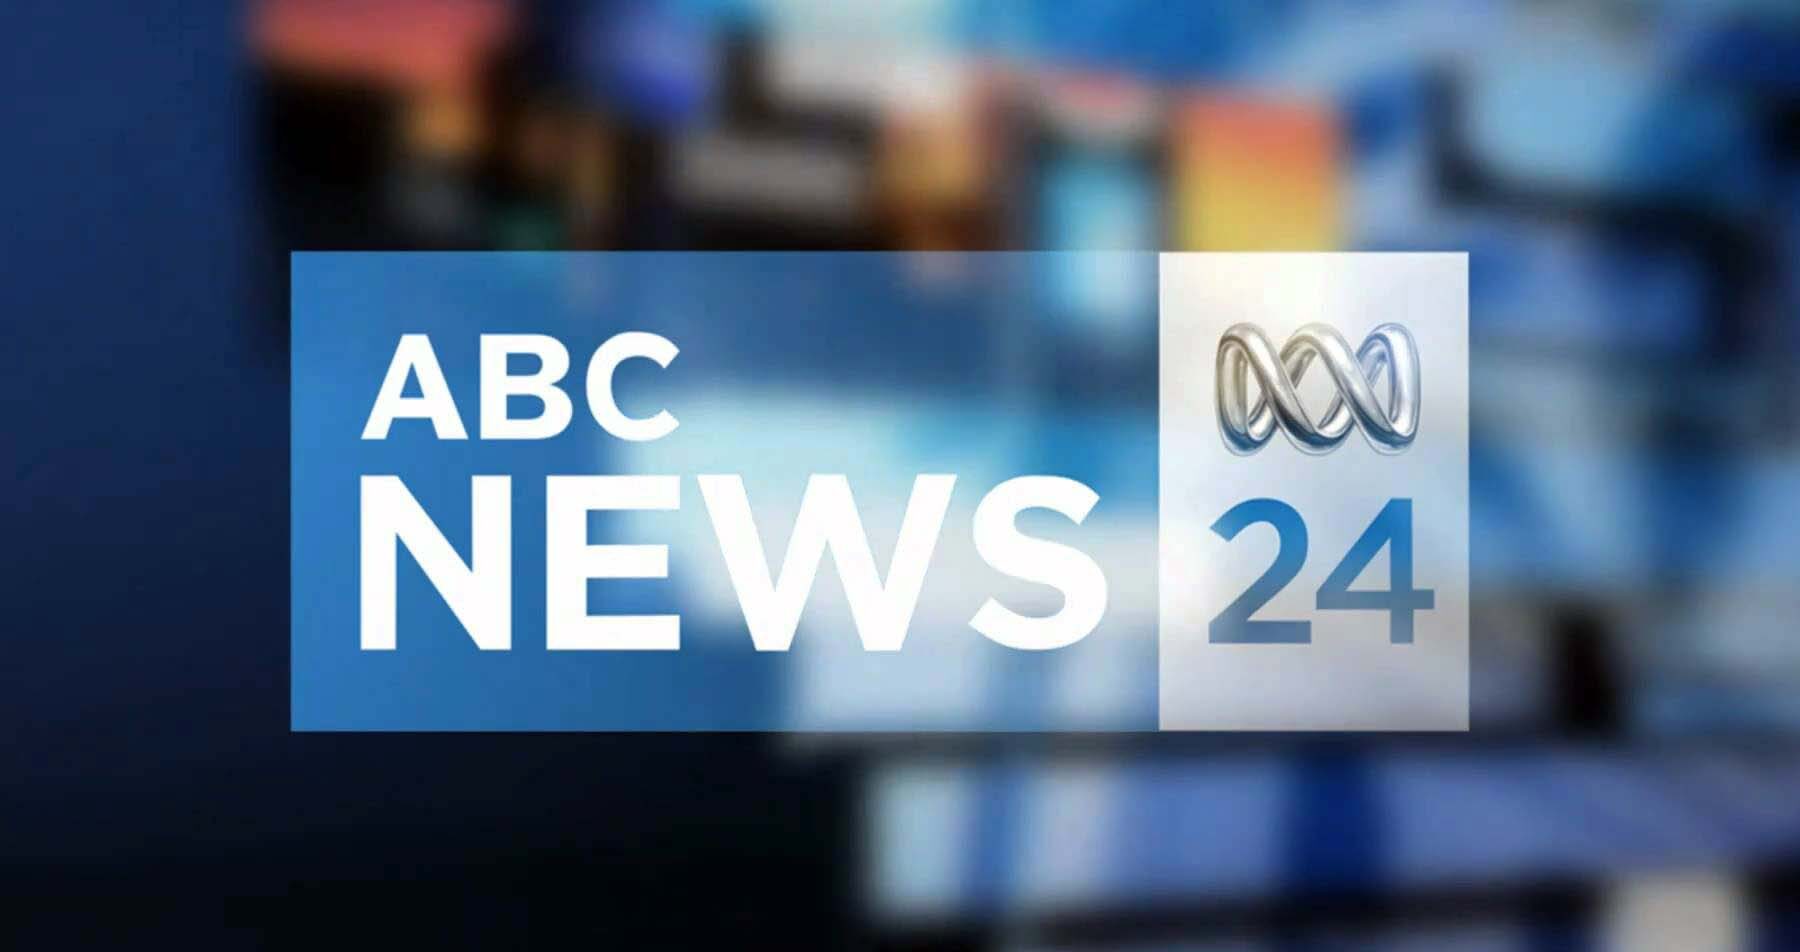 http://www.livenewsmag.com/wp-content/uploads/2016/07/ABC-News-Australia.jpg